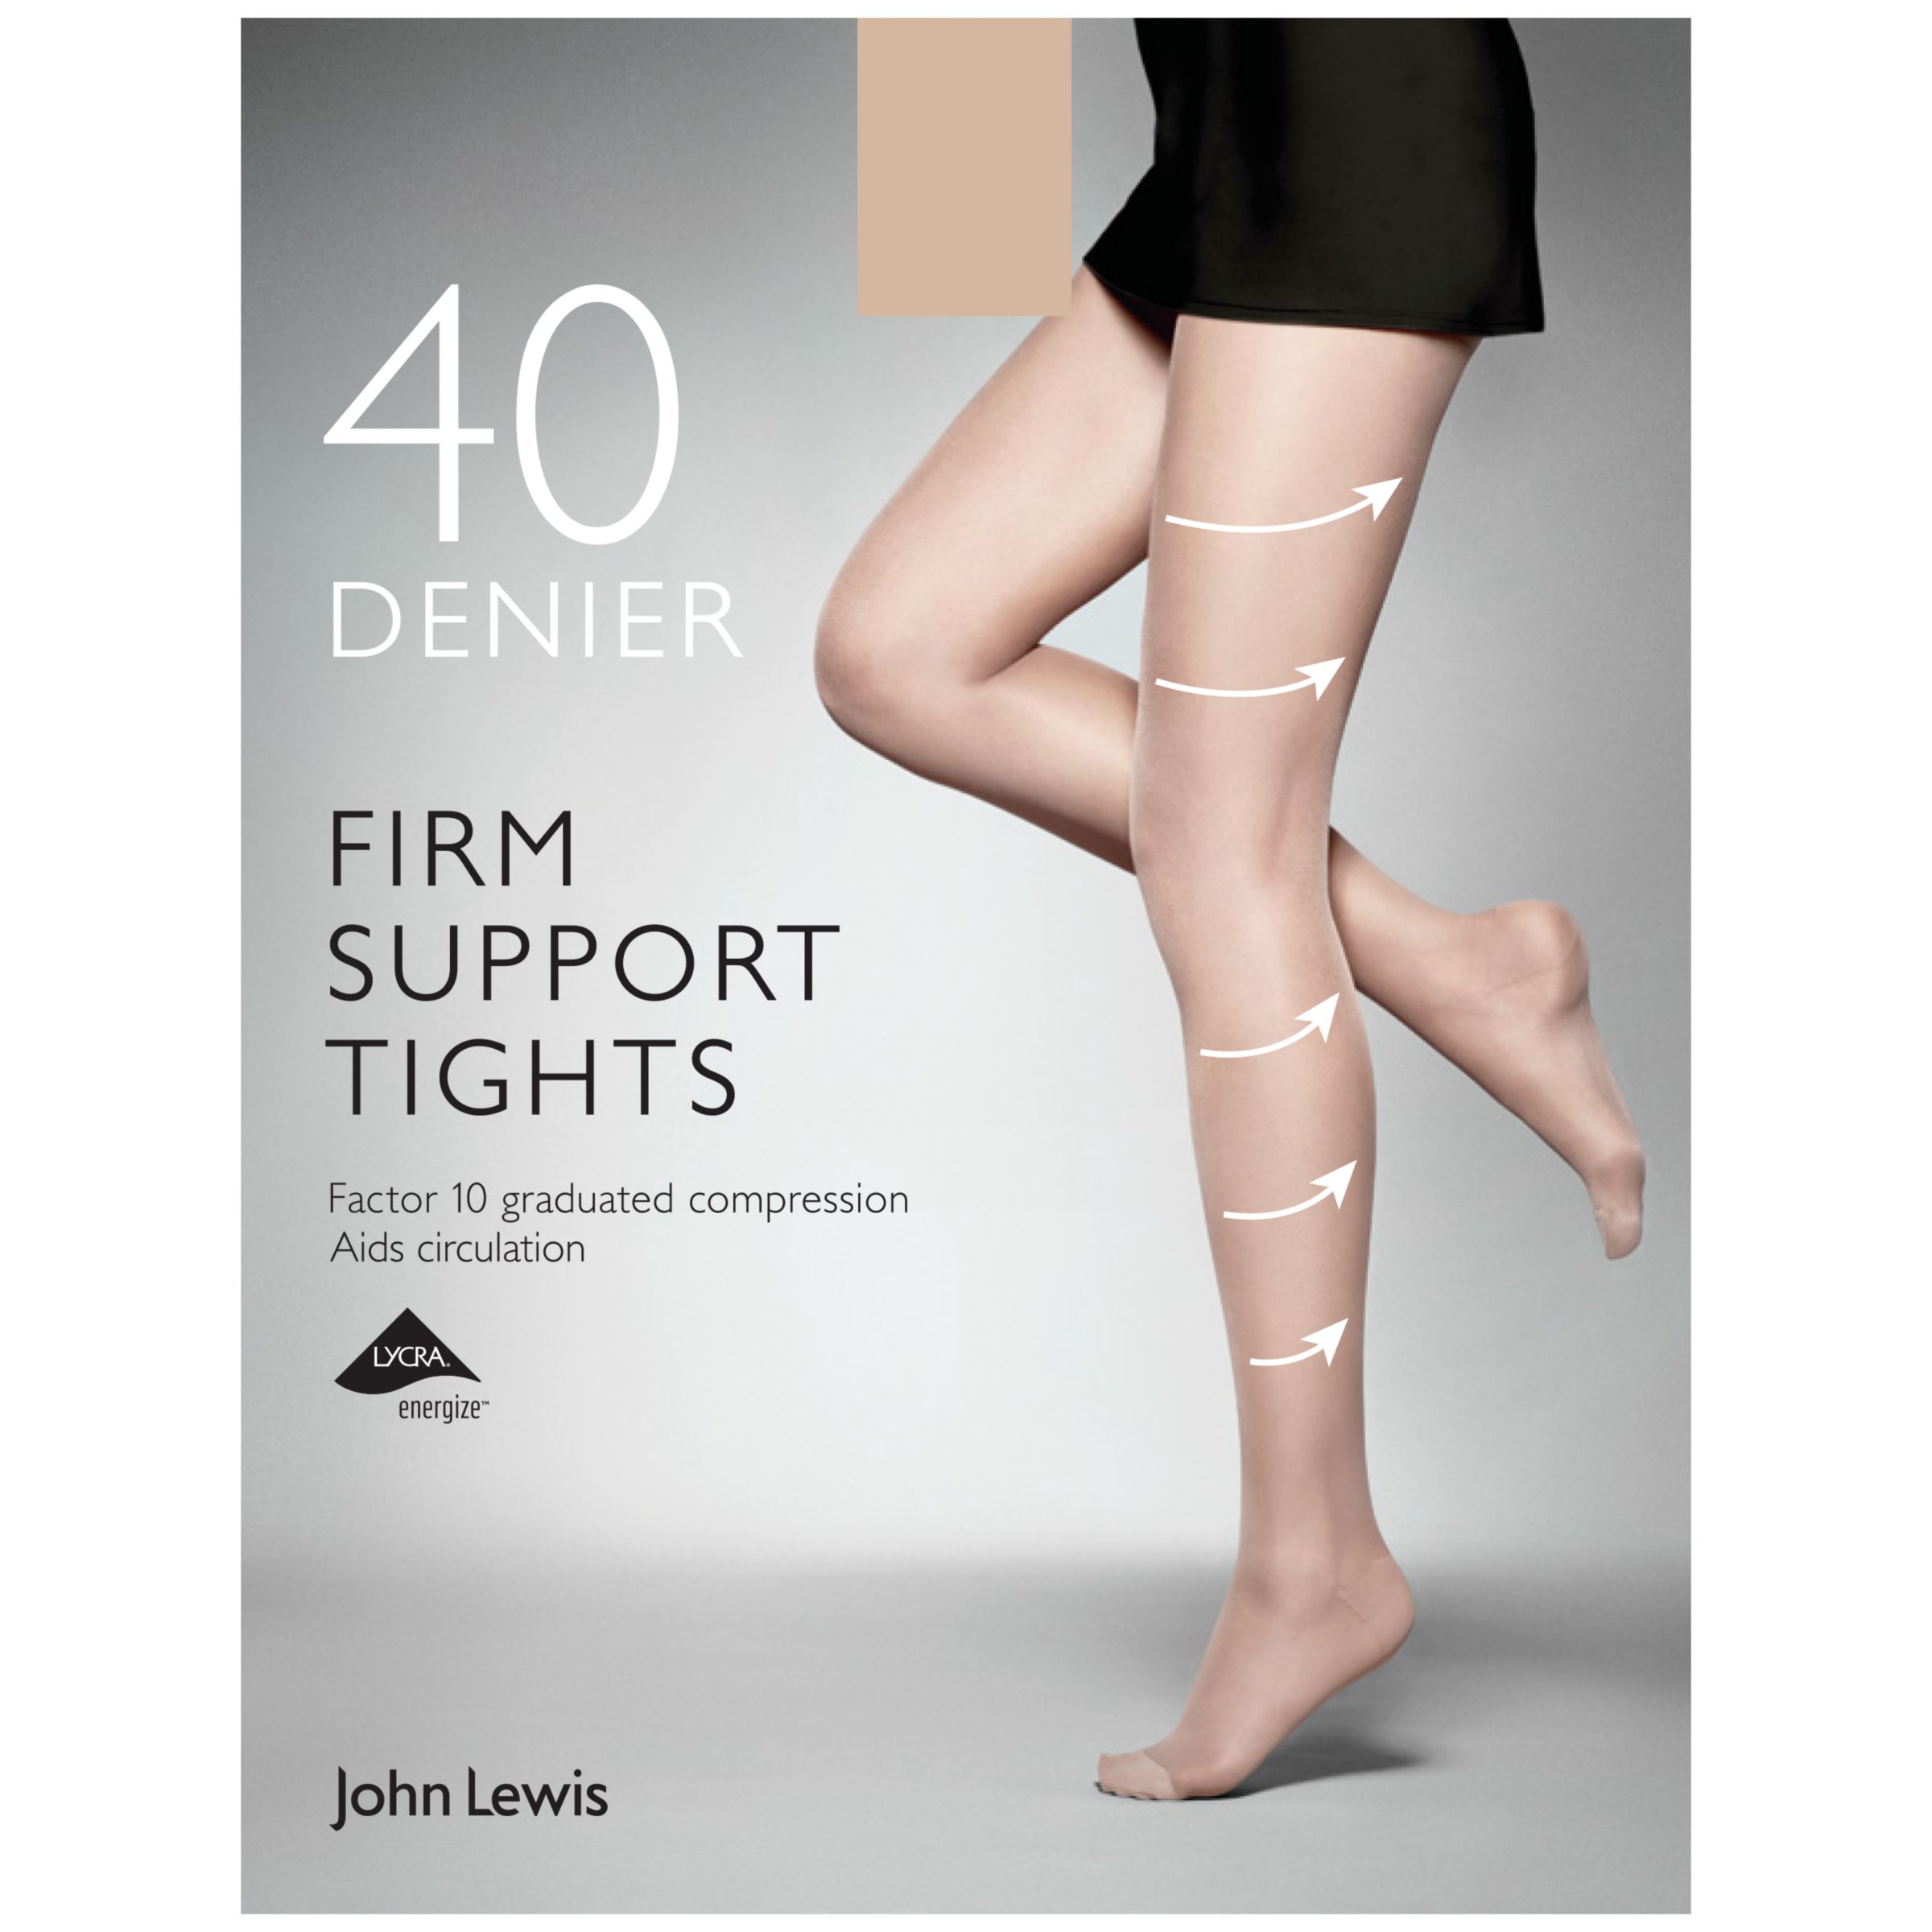 John Lewis 40 Denier Firm Support Tights, Natural Tan, L